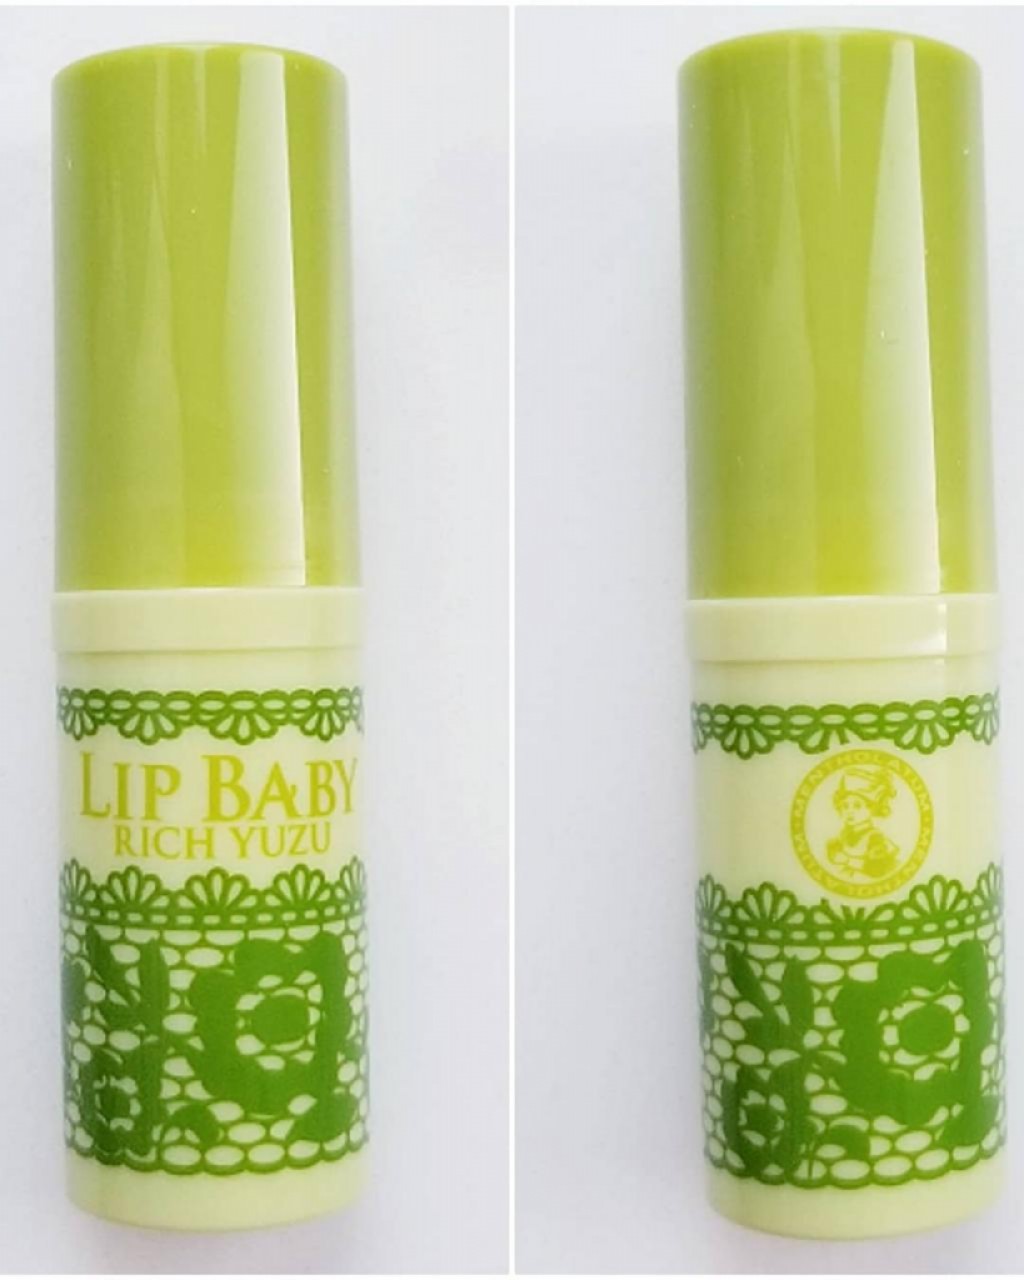 ROHTO Mentholatum Lip Baby Natural Rich yuzu Японский бальзам для губ